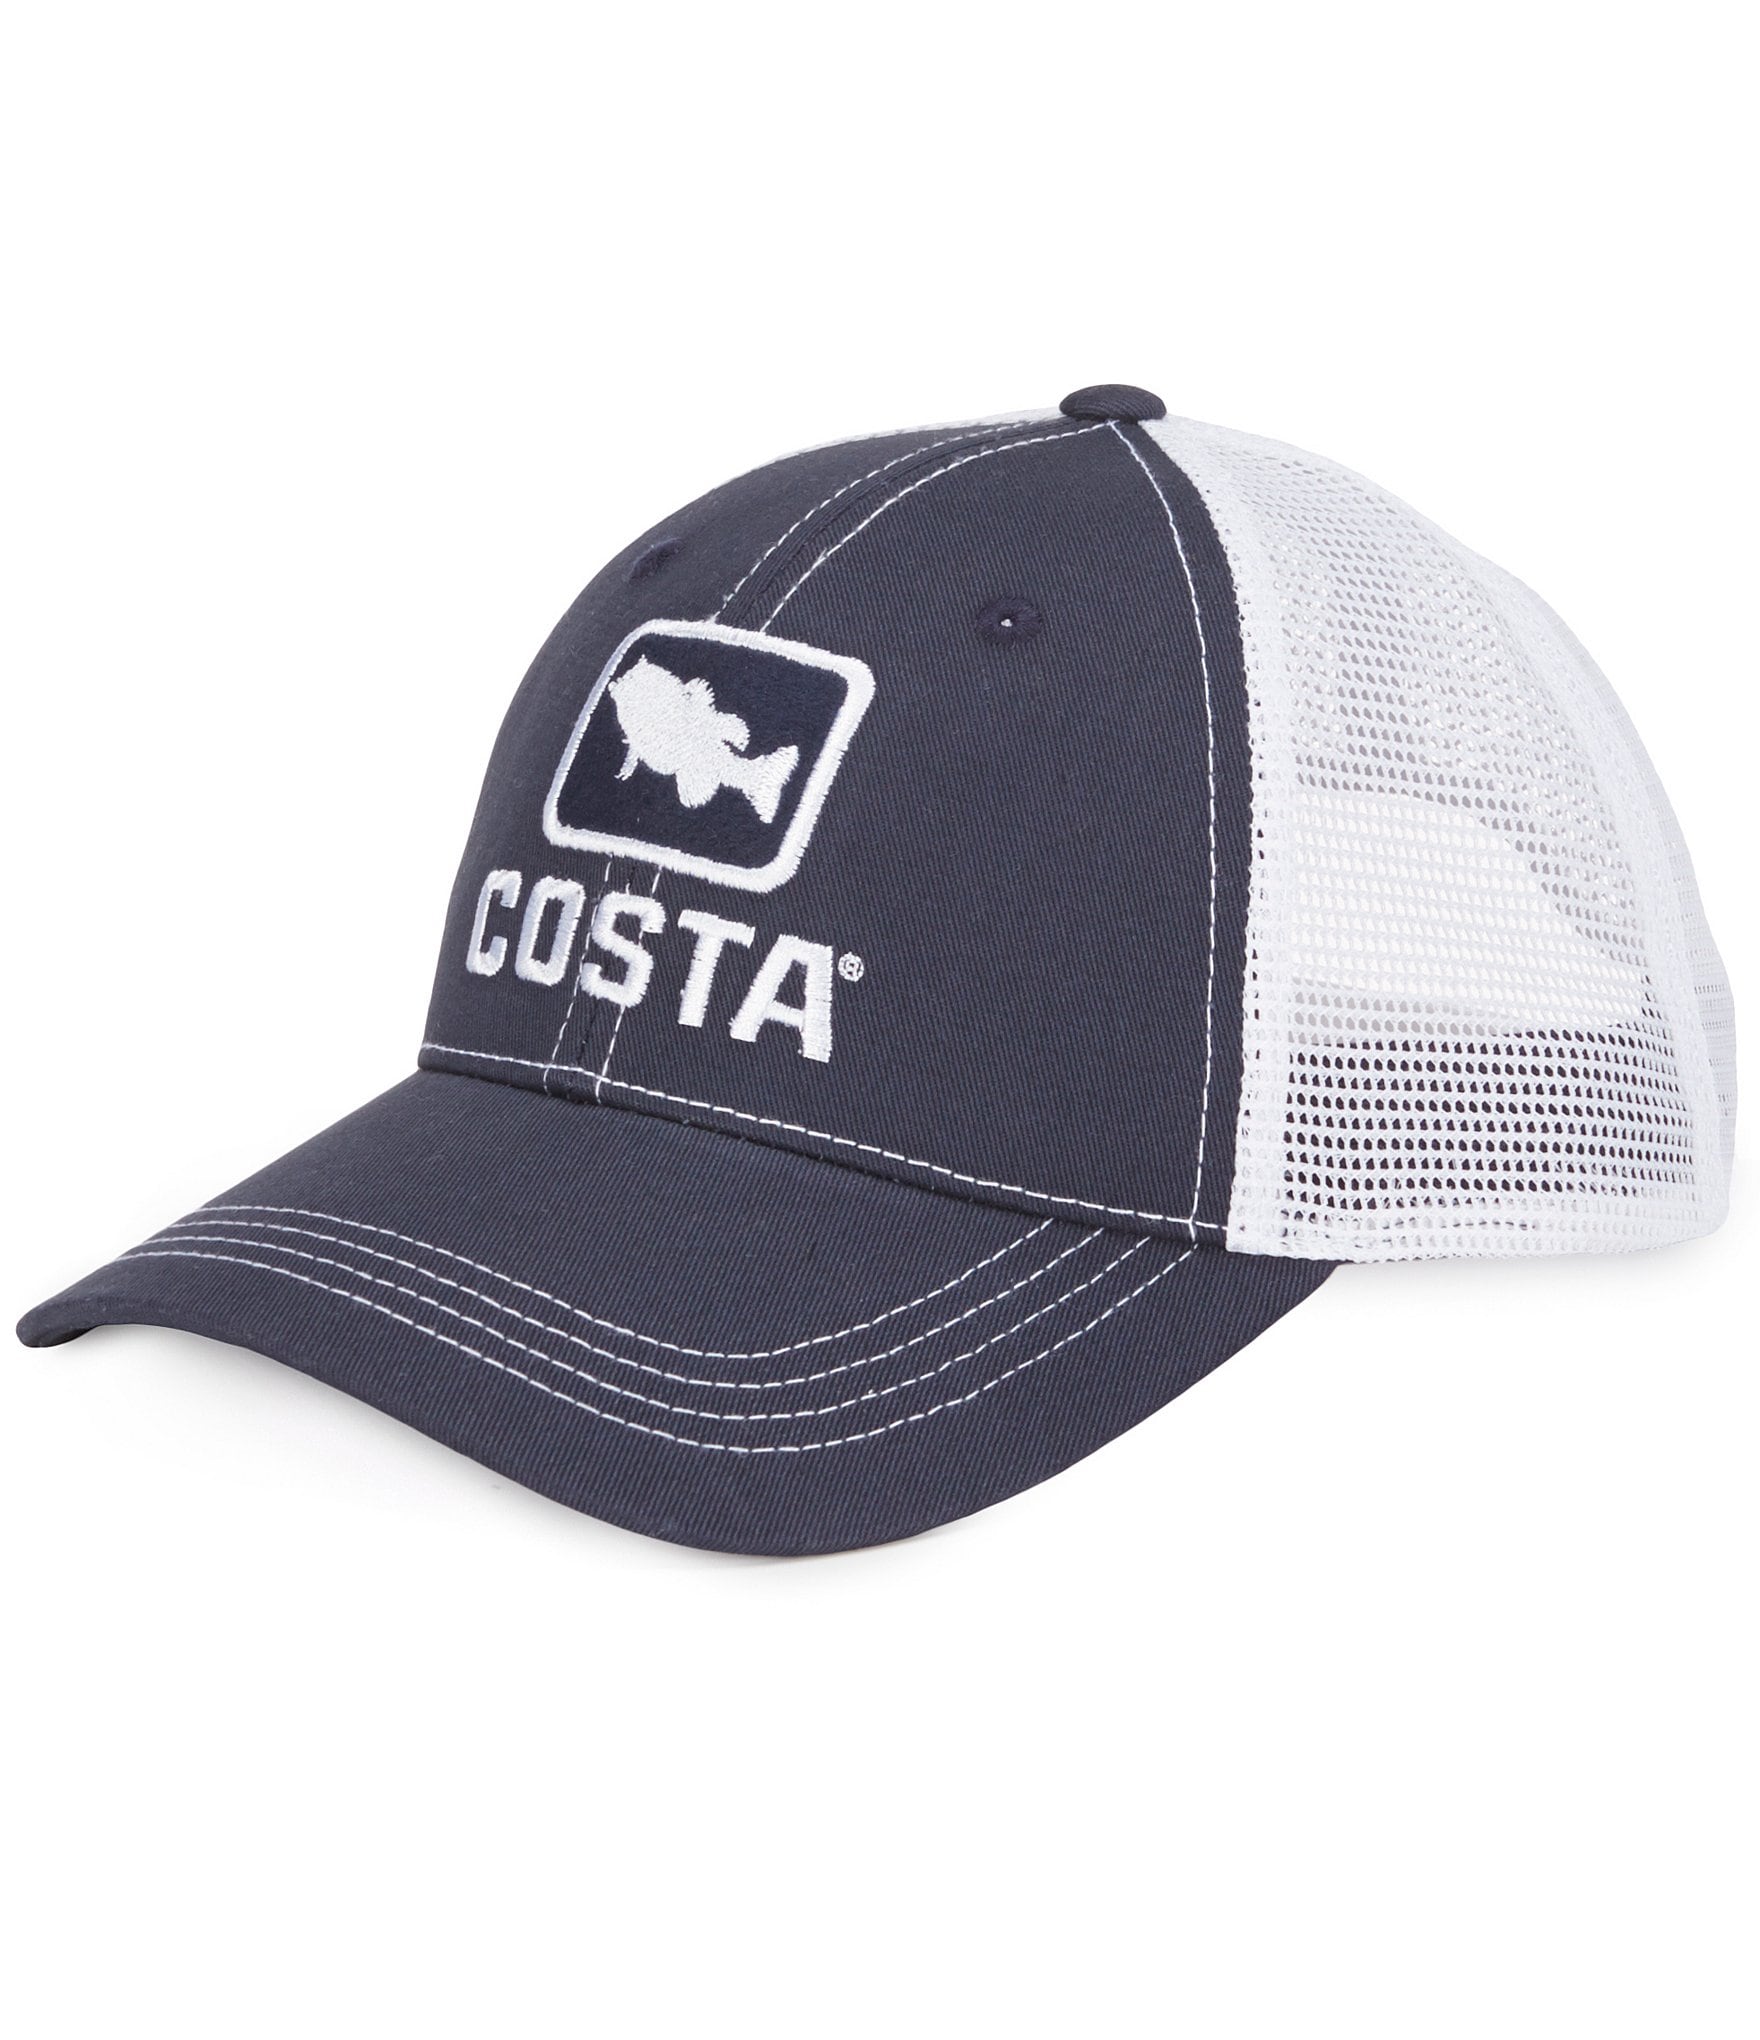 Costa Embroidered XL Bass Trucker Hat | Dillards